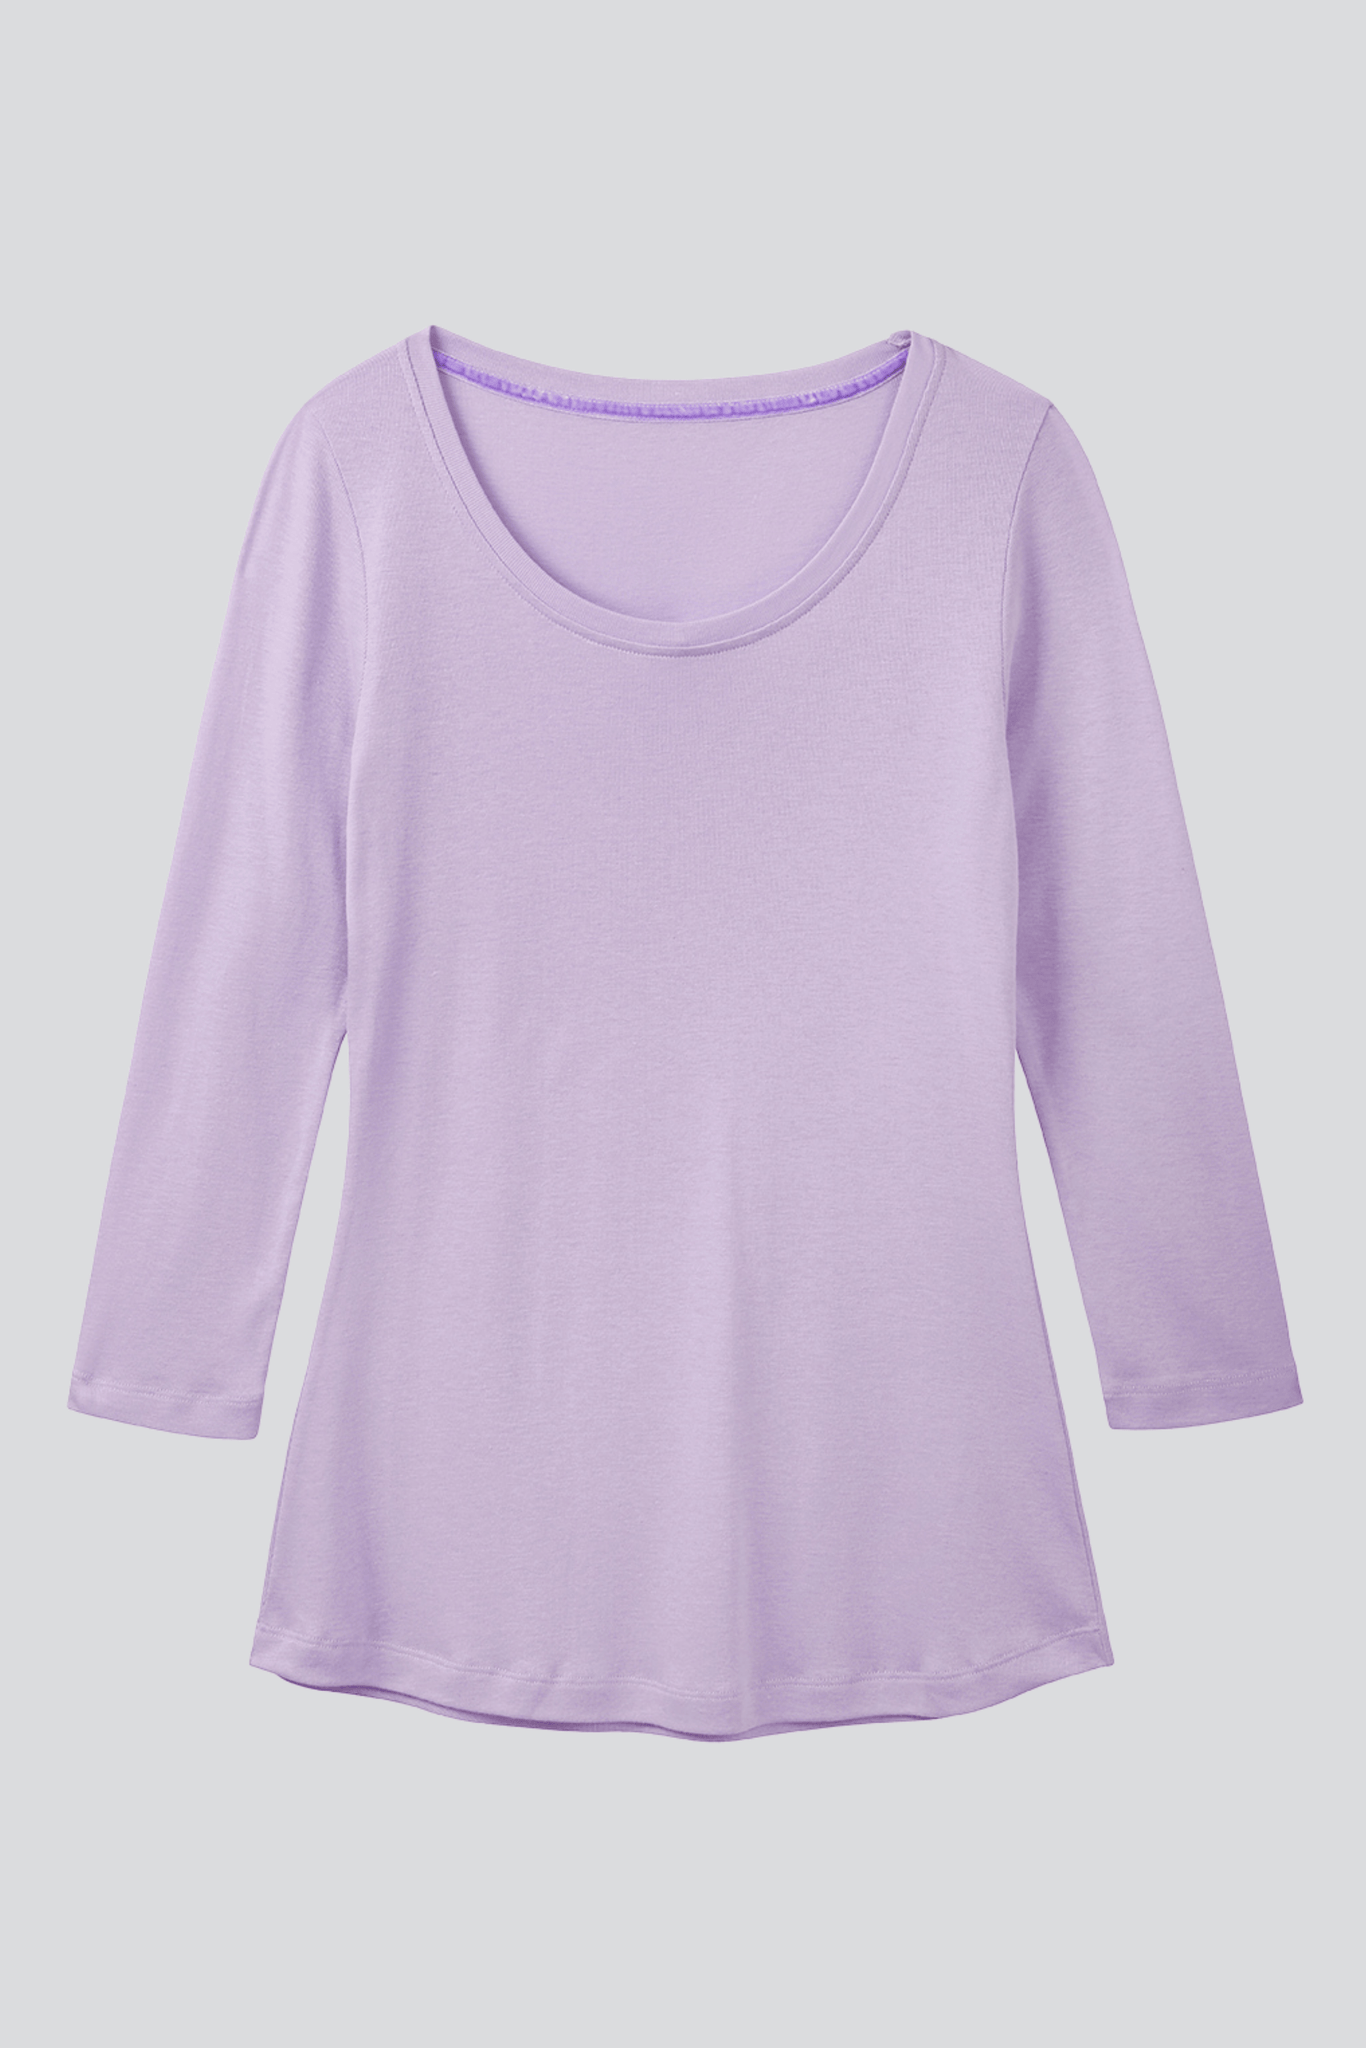 3/4 Sleeve Scoop Neck T-Shirt S Women's 3/4 Sleeve T-shirt Lavender Hill